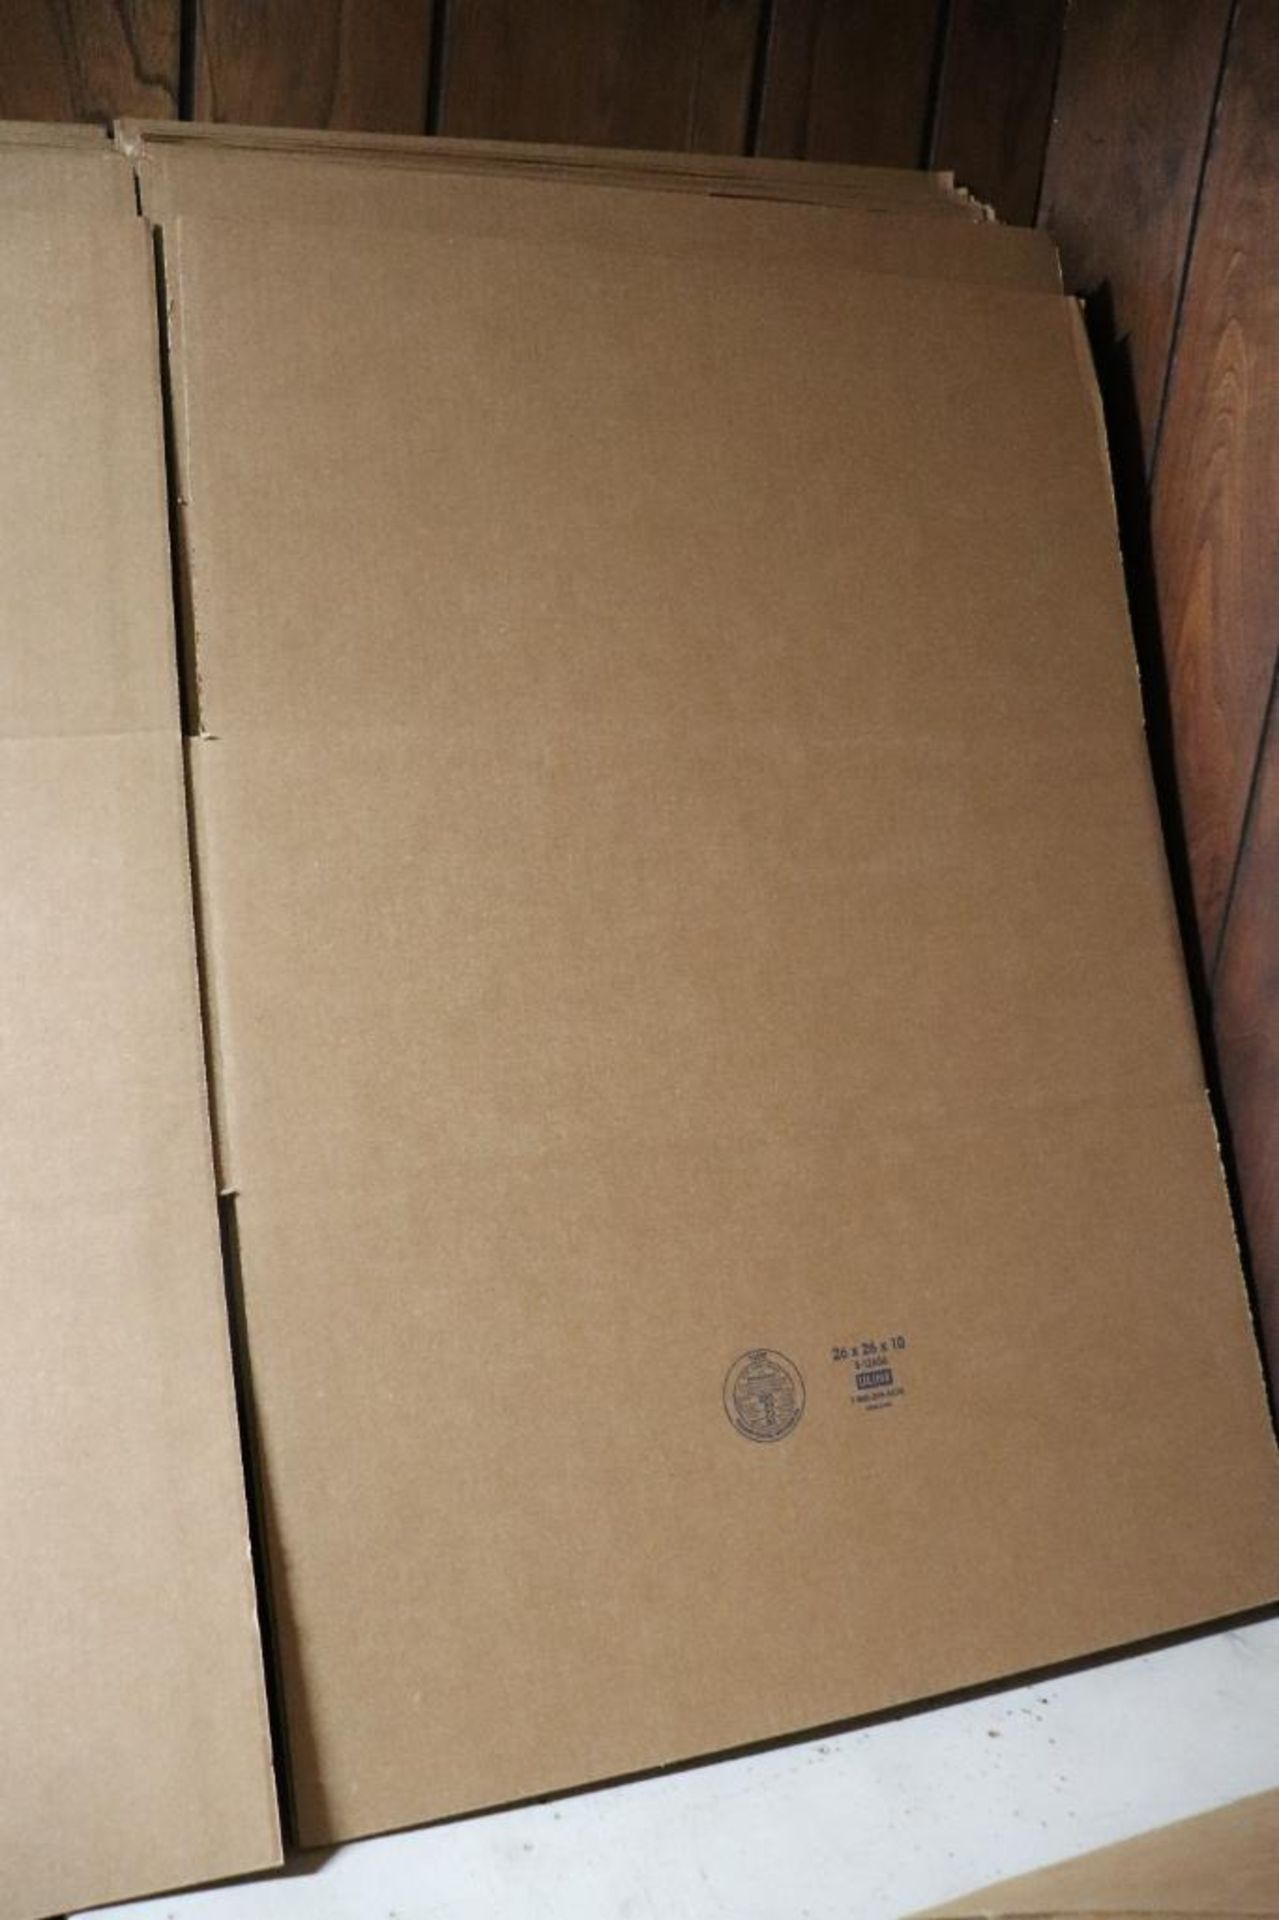 Uline cardboard boxes - Image 16 of 25